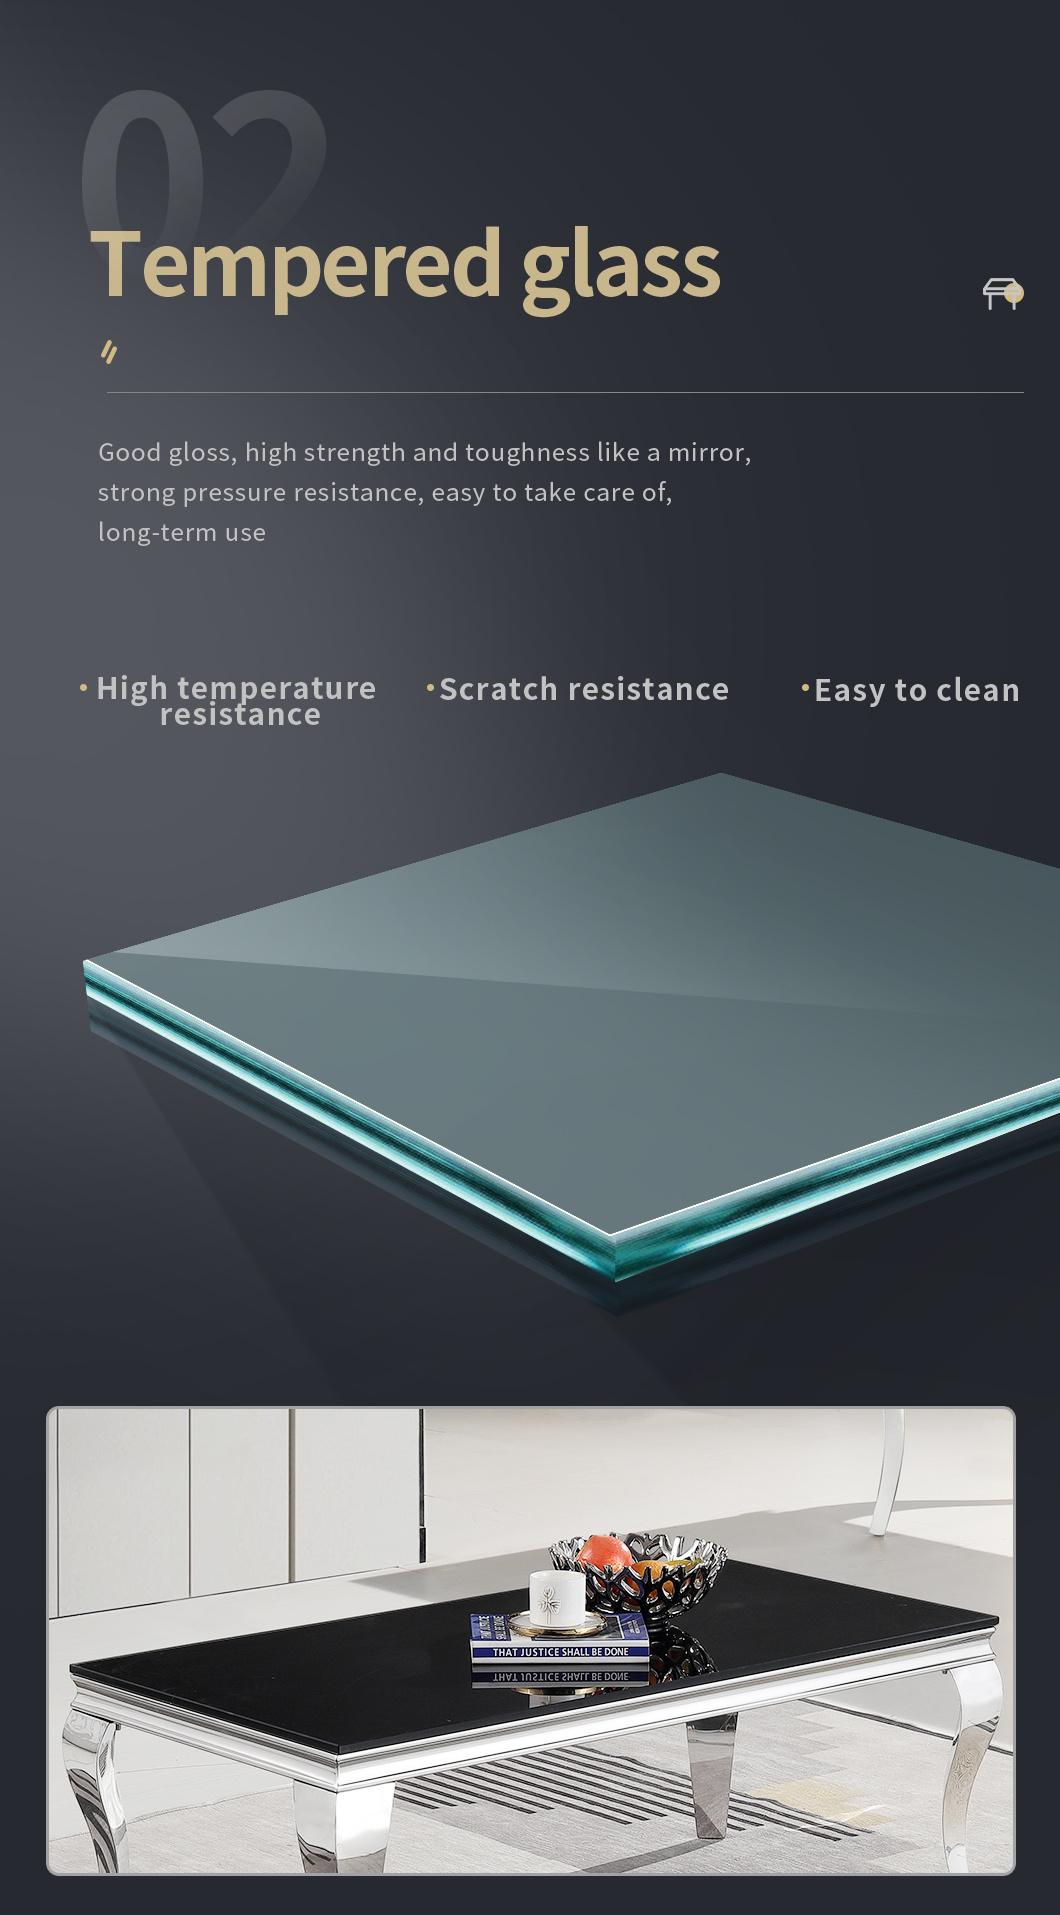 High Quality Fixed Optional Diron Carton Box Customized China Marble Table